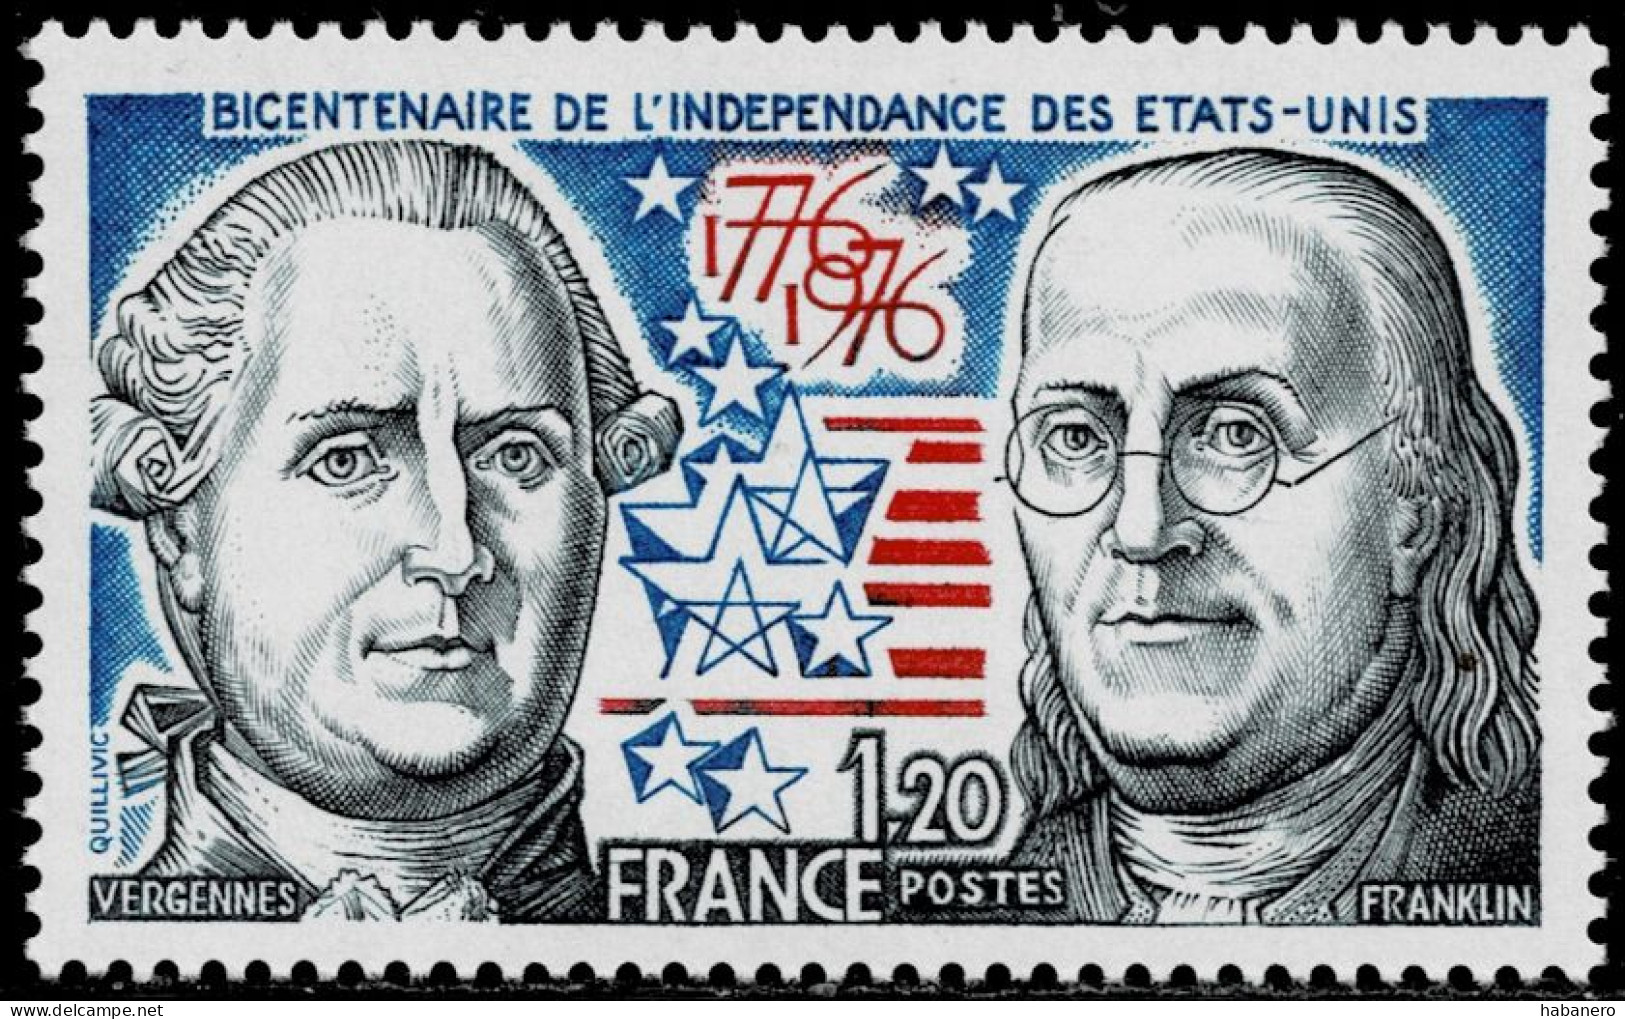 FRANCE 1976 Mi 1963 BICENTENARY OF AMERICAN REVOLUTION MINT STAMP ** - Us Independence